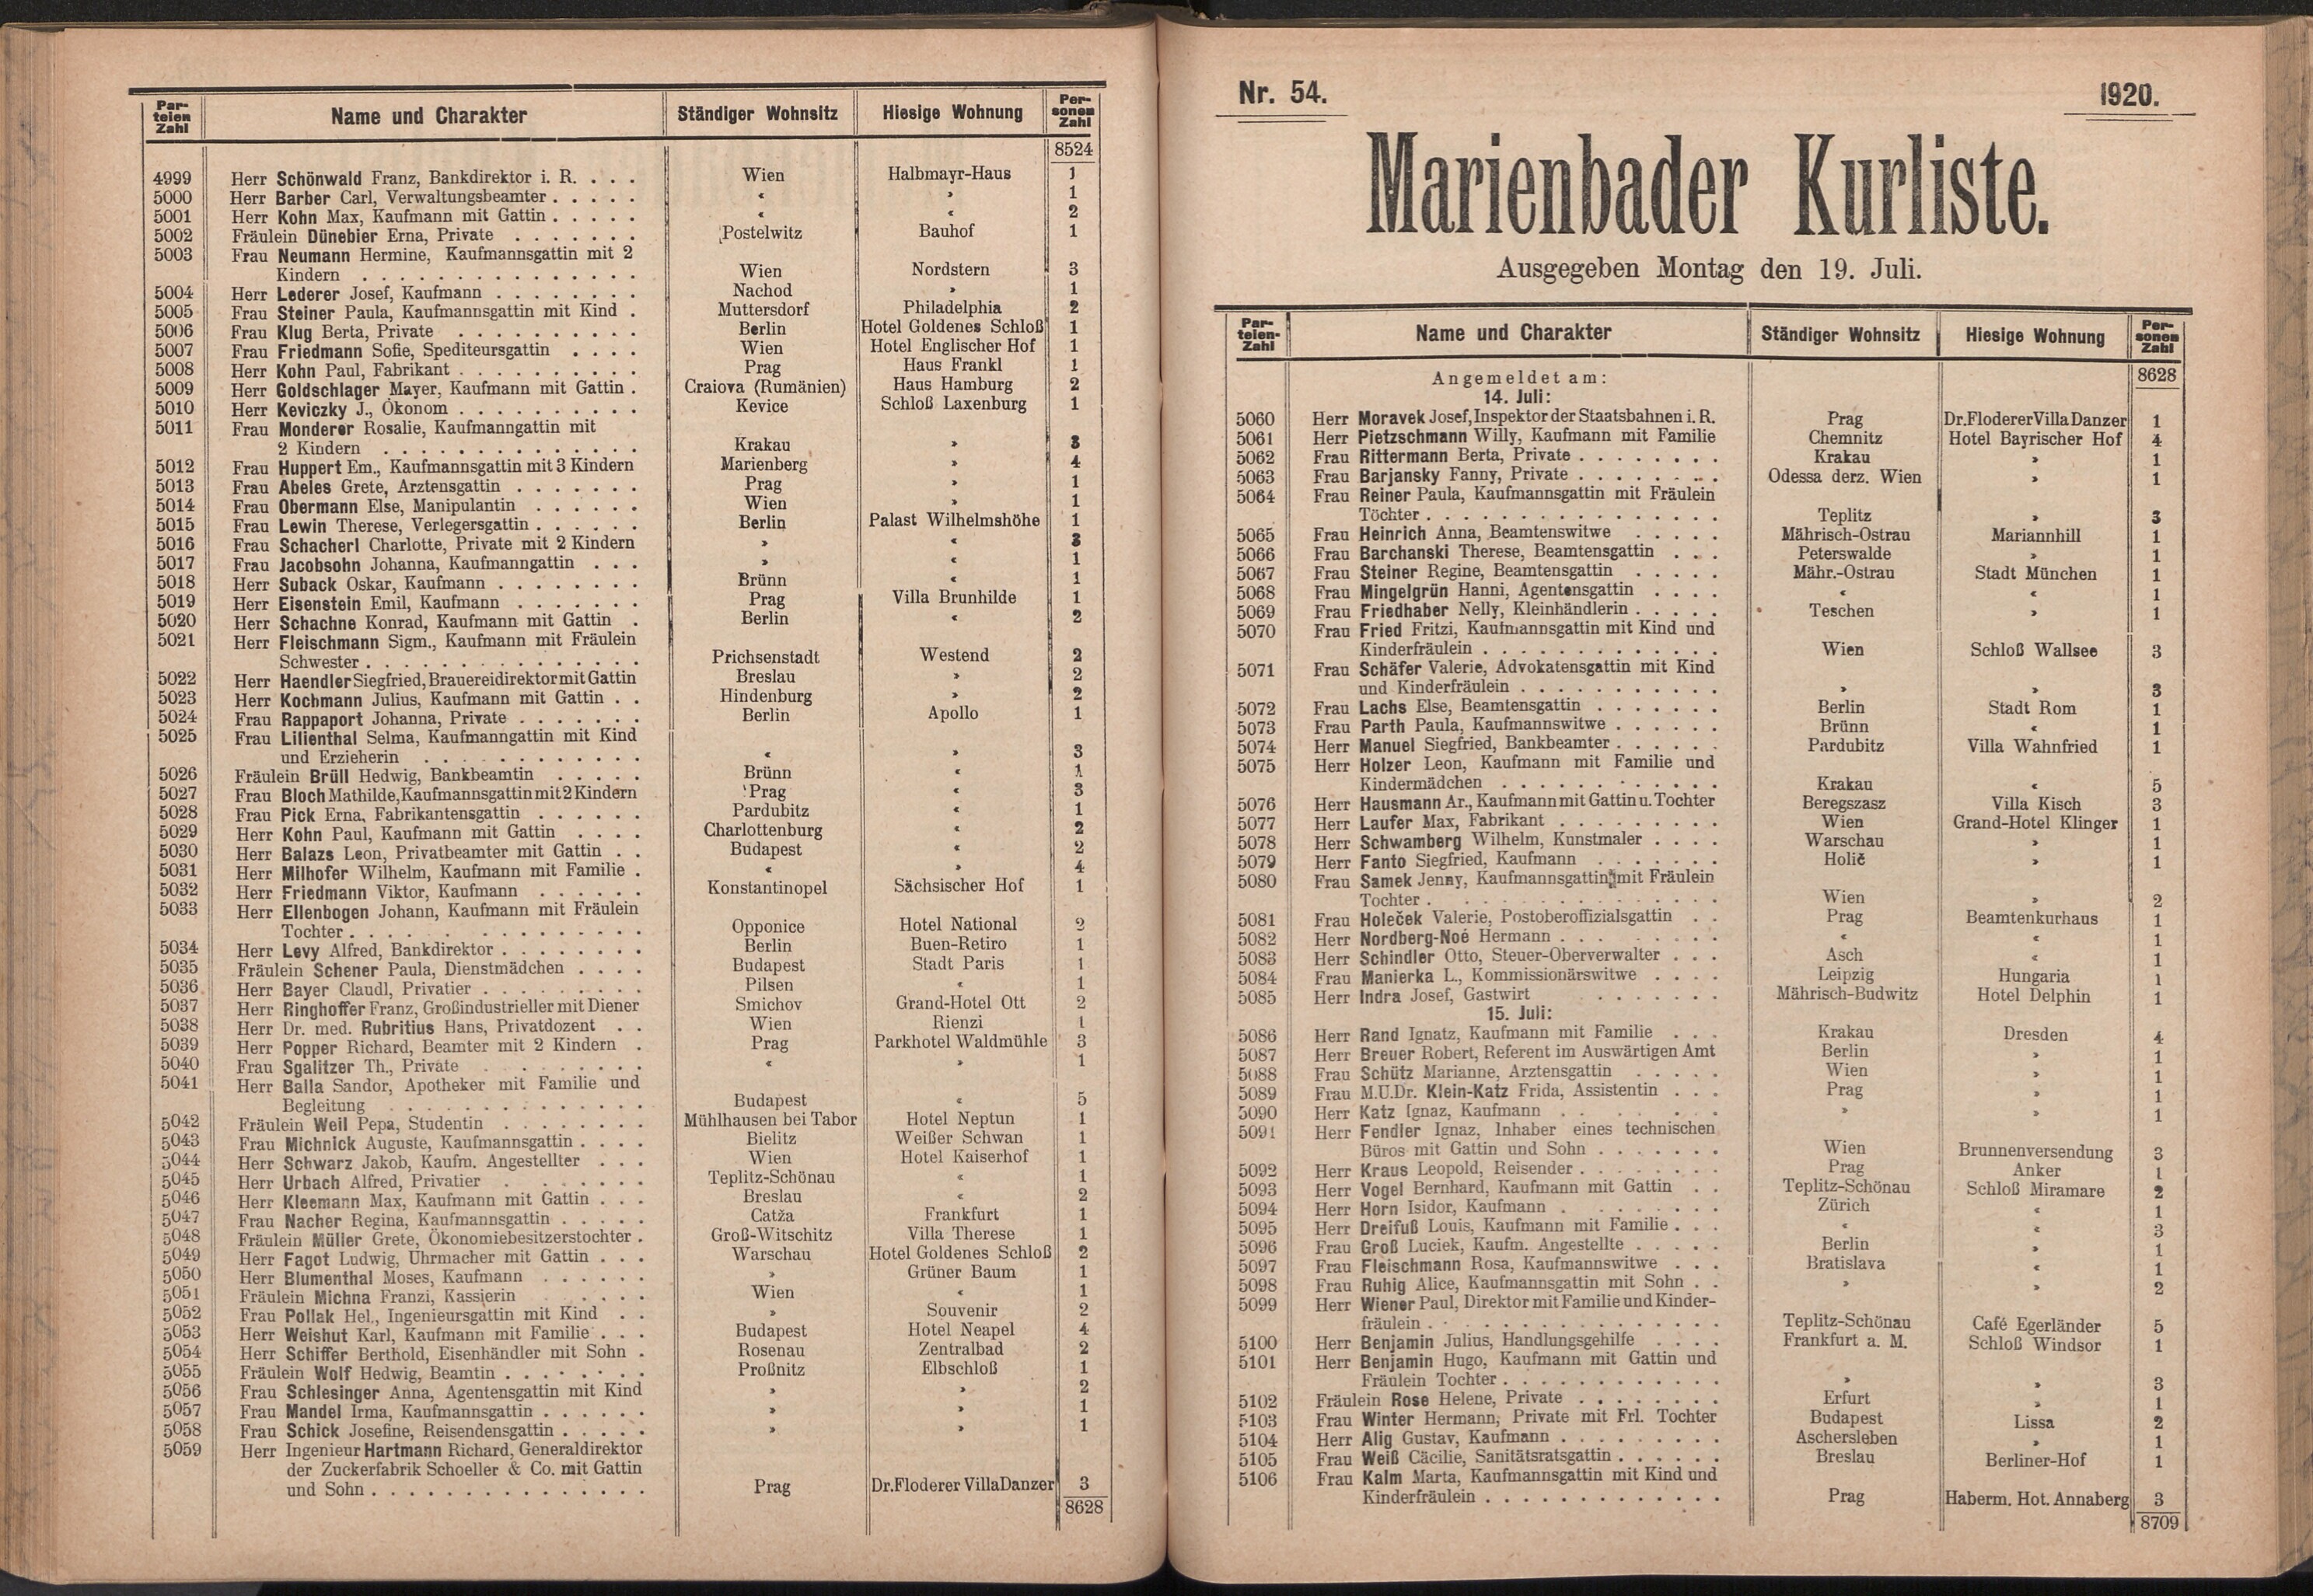 92. soap-ch_knihovna_marienbader-kurliste-1920_0920